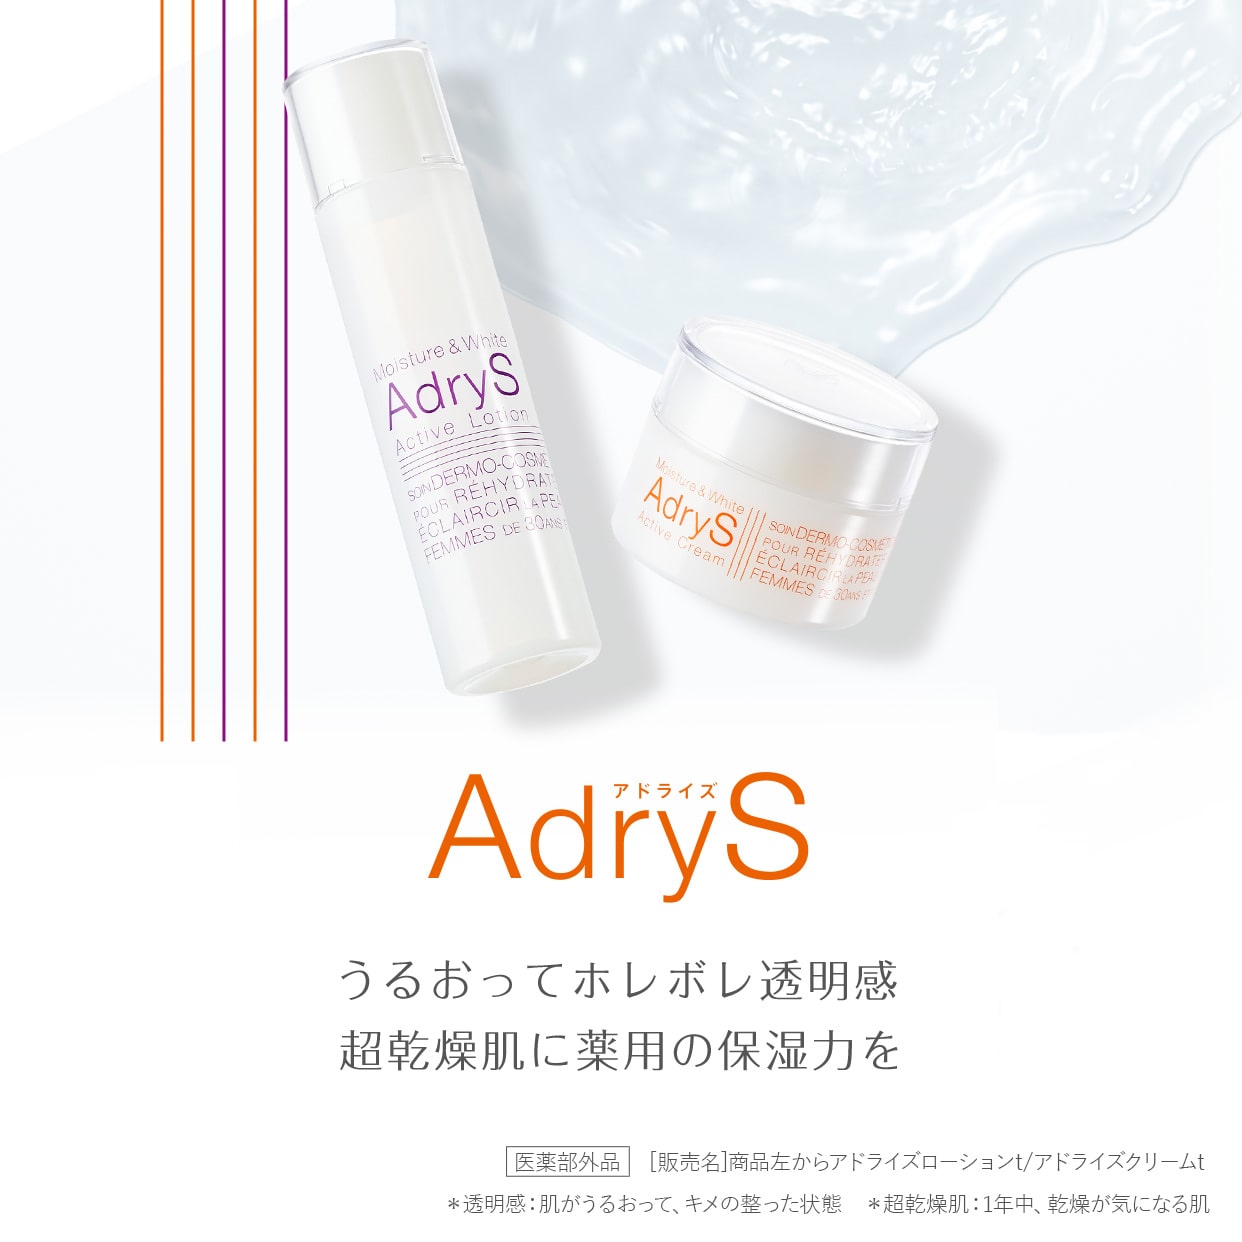 AdryS（アドライズ）うるおってホレボレ透明感 超乾燥肌に薬用の保湿力を。